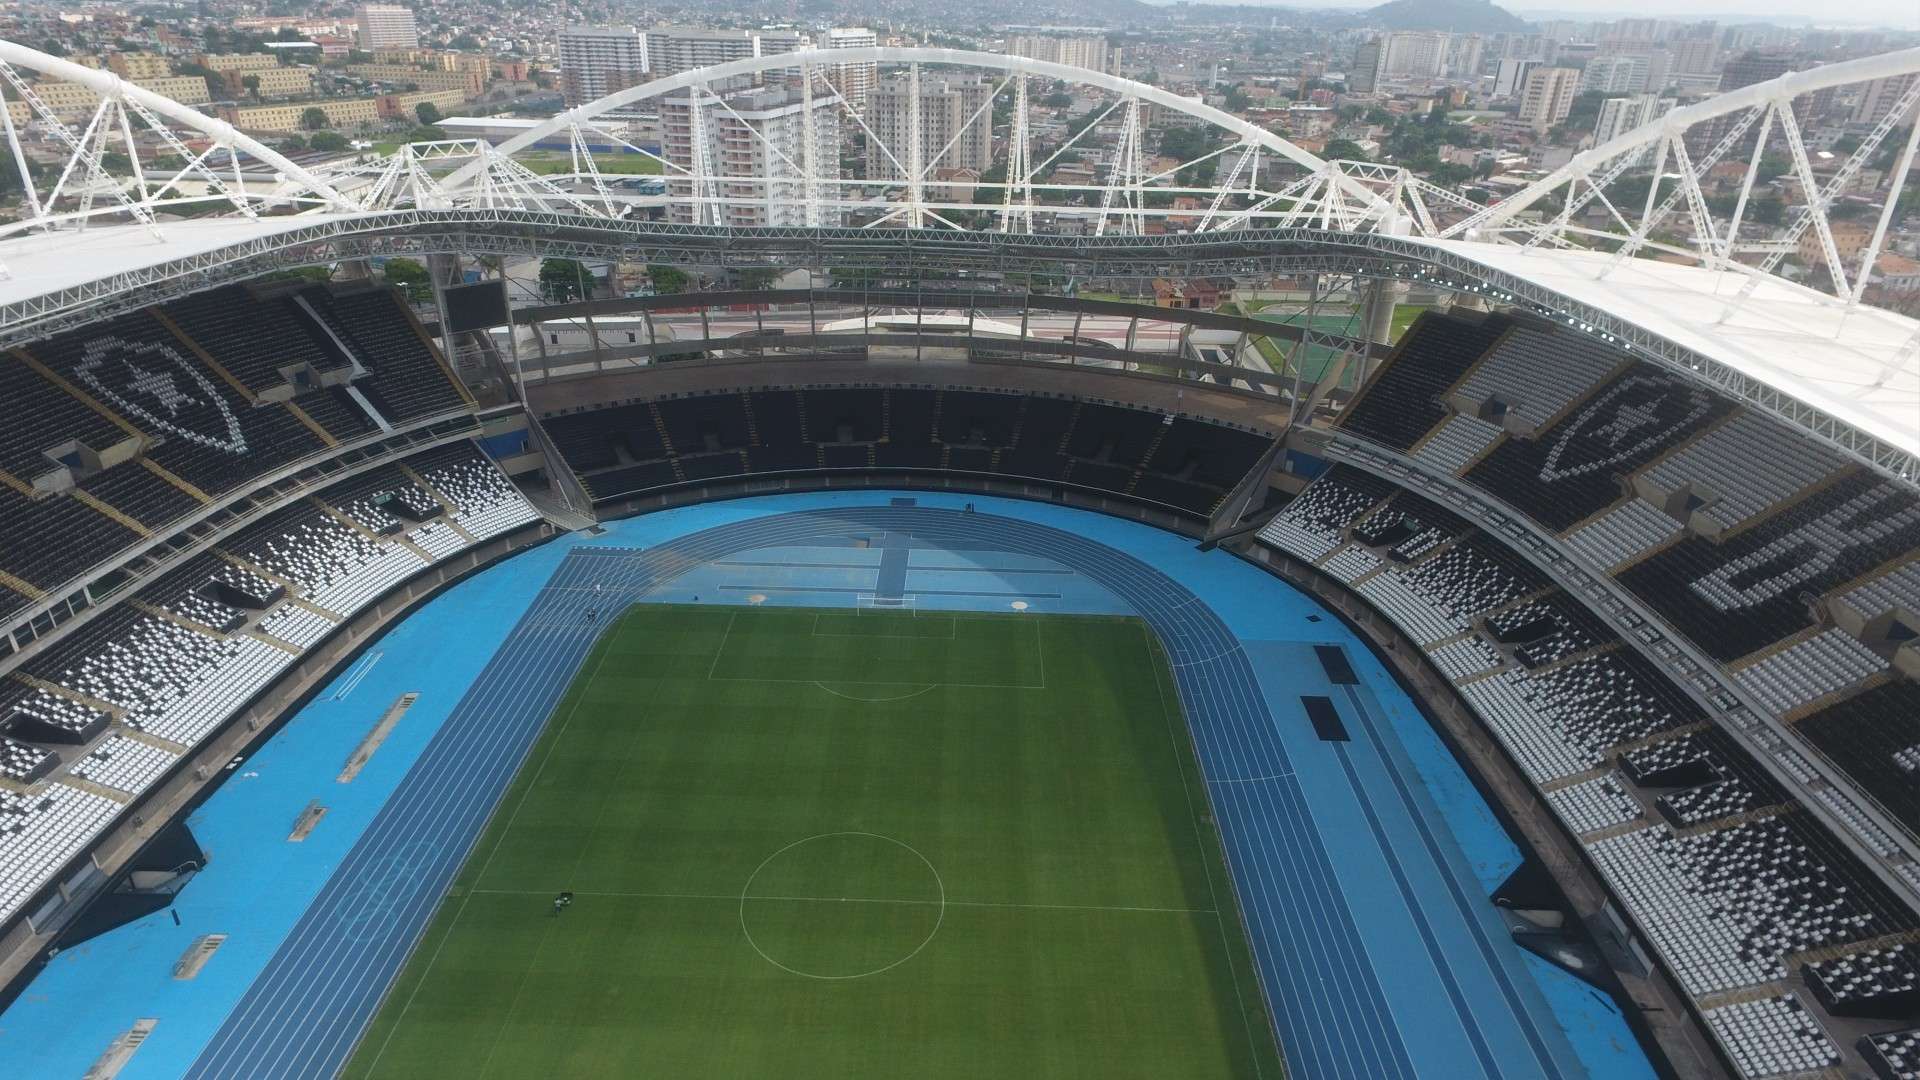 Estádio Nilton Santos Botafogo